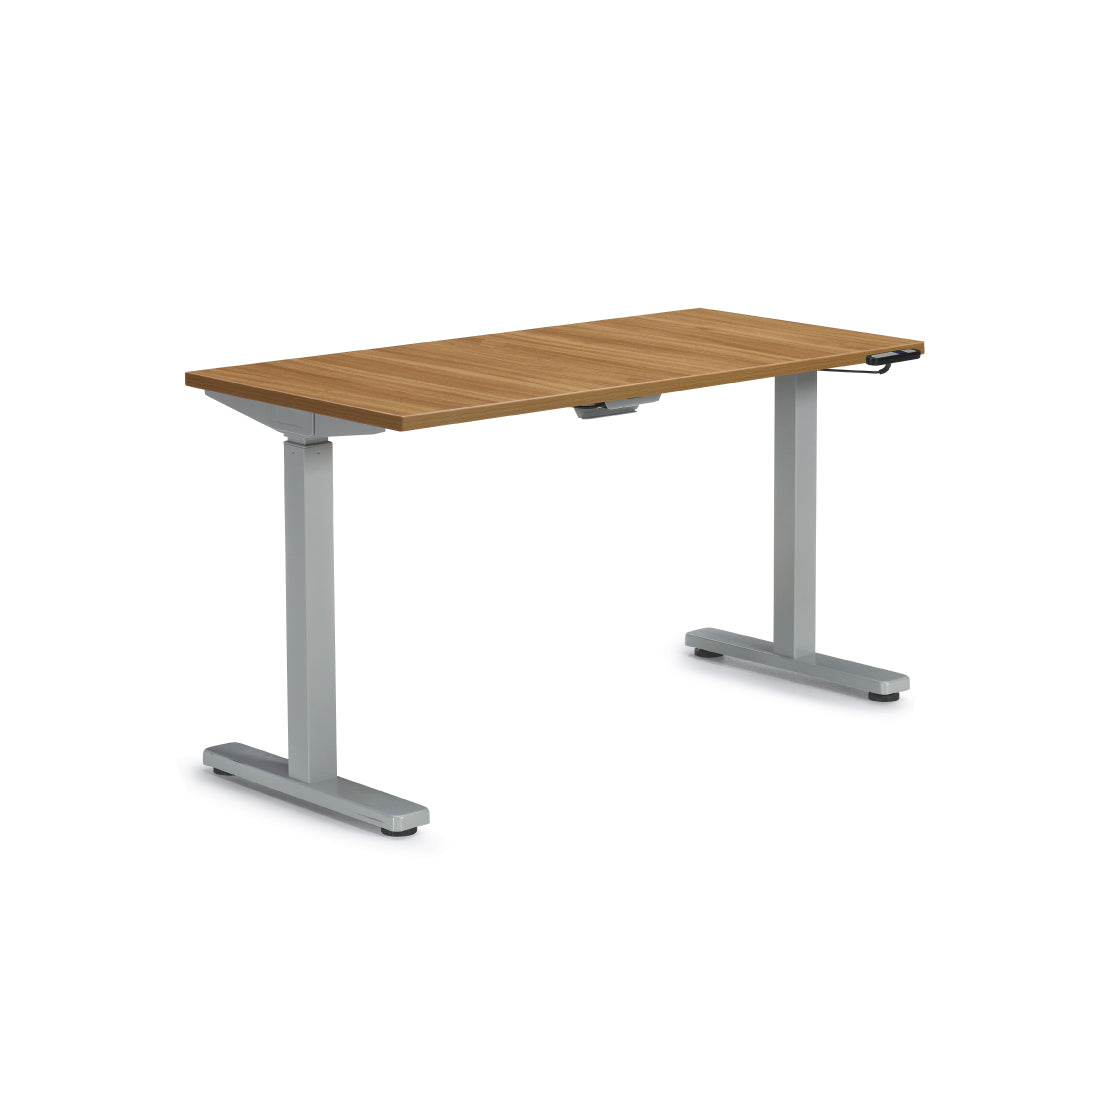 Height Adjustable Desk 48" x 24" - Kainosbuy.com